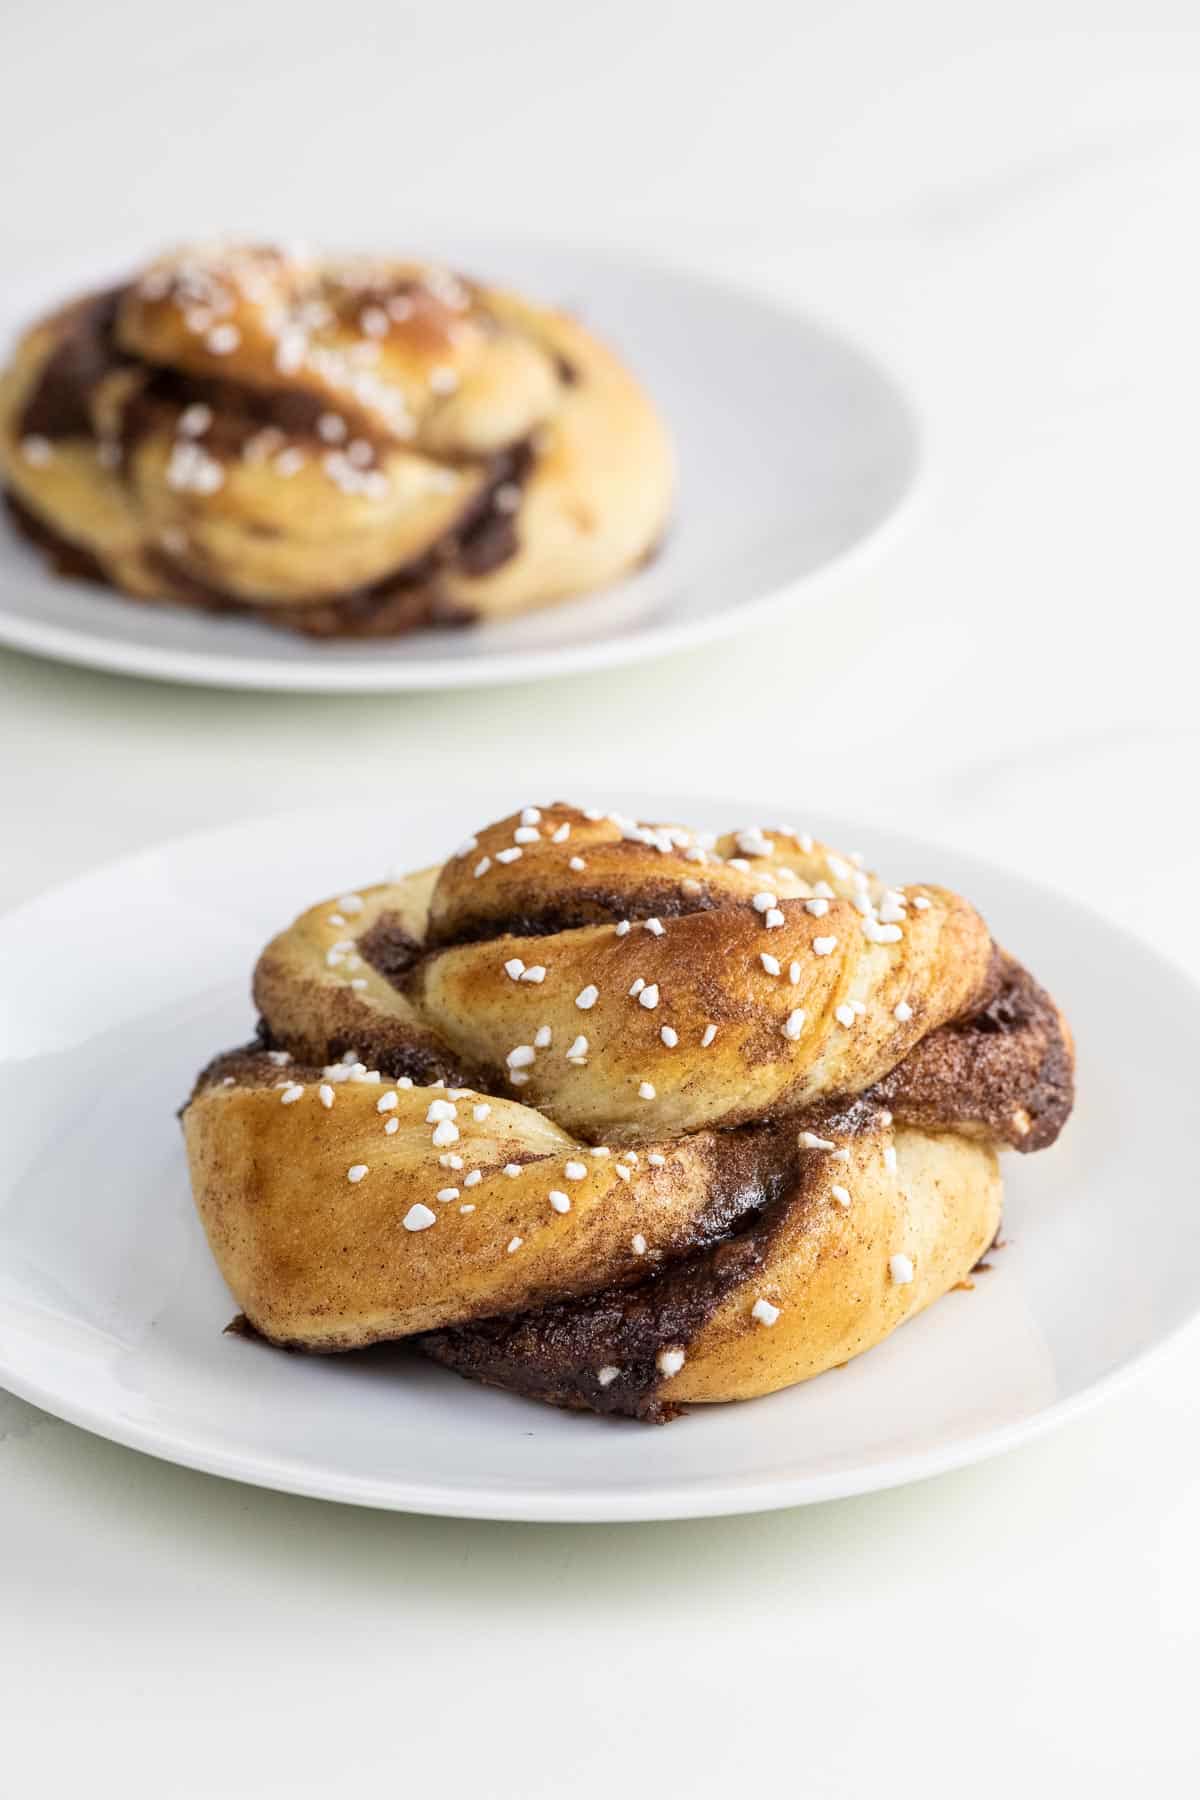 swedish cinnamon buns on small plates